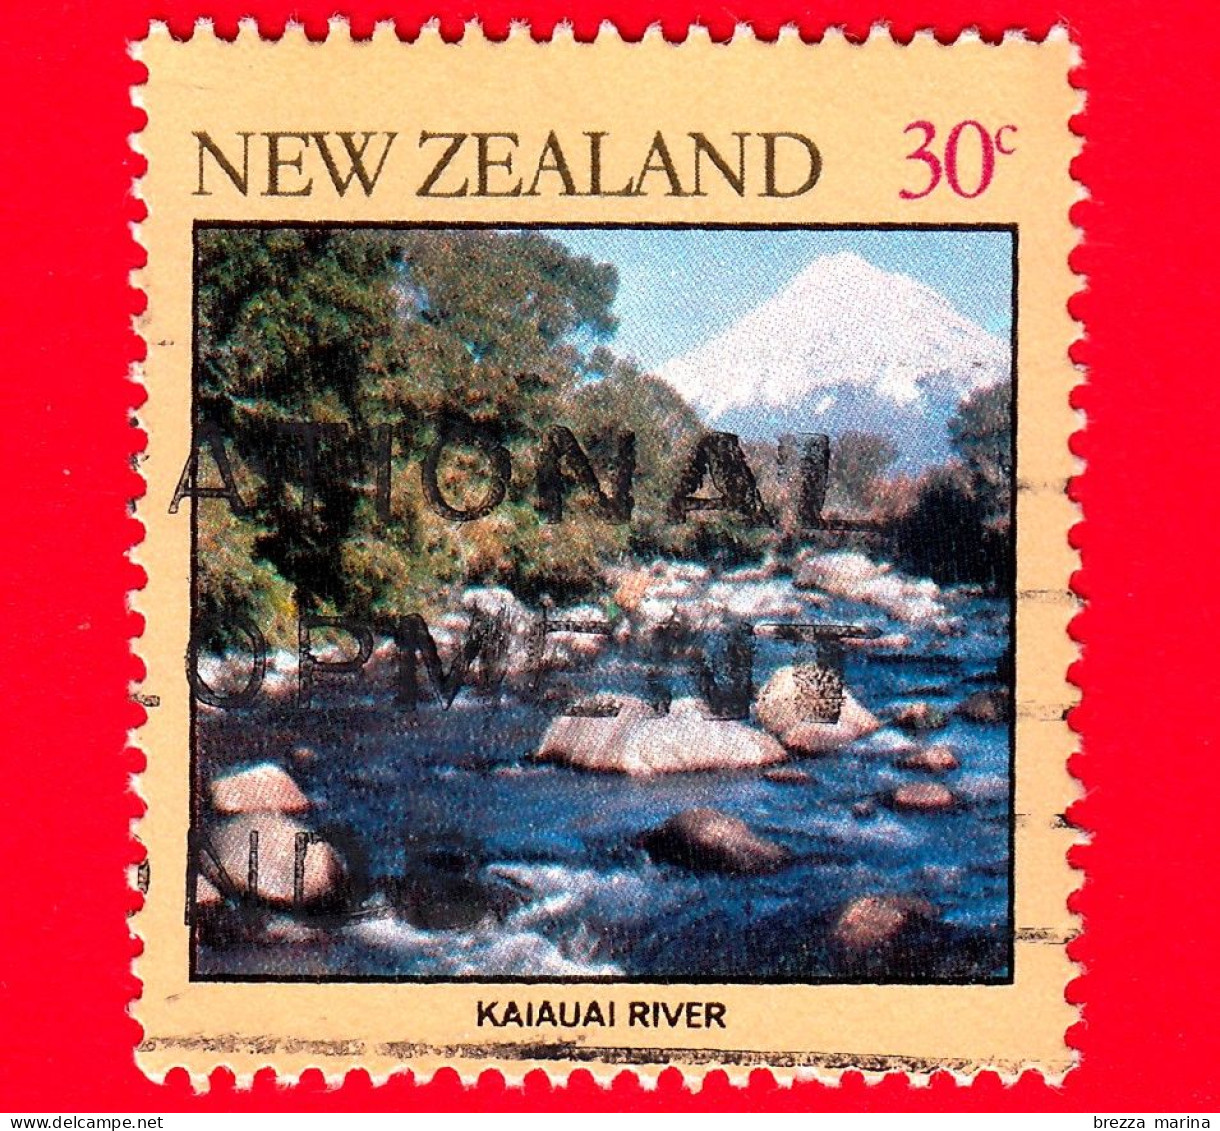 NUOVA ZELANDA - Usato - 1981 - Fiumi - Paesaggi - Fiume Kaiauai - River - 30 - Usati